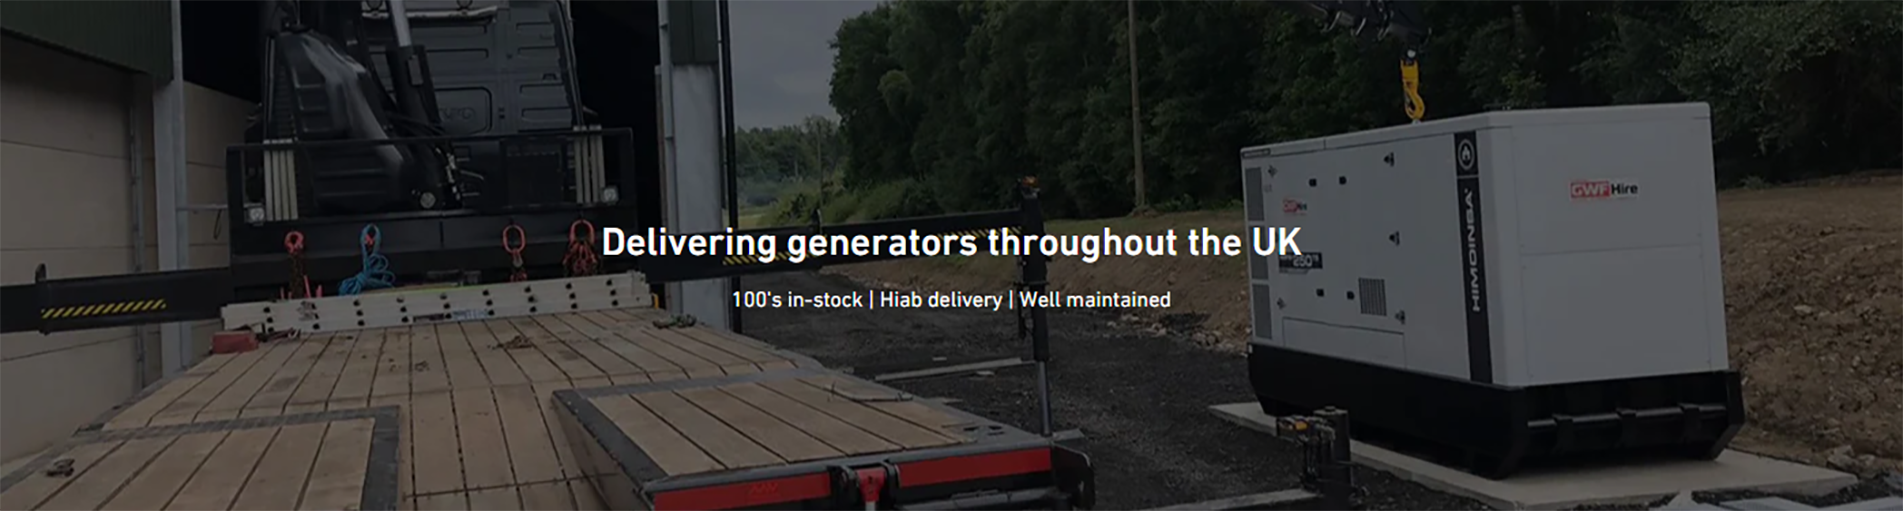 GWF Generators Delivering Generators - Hiab Delivery